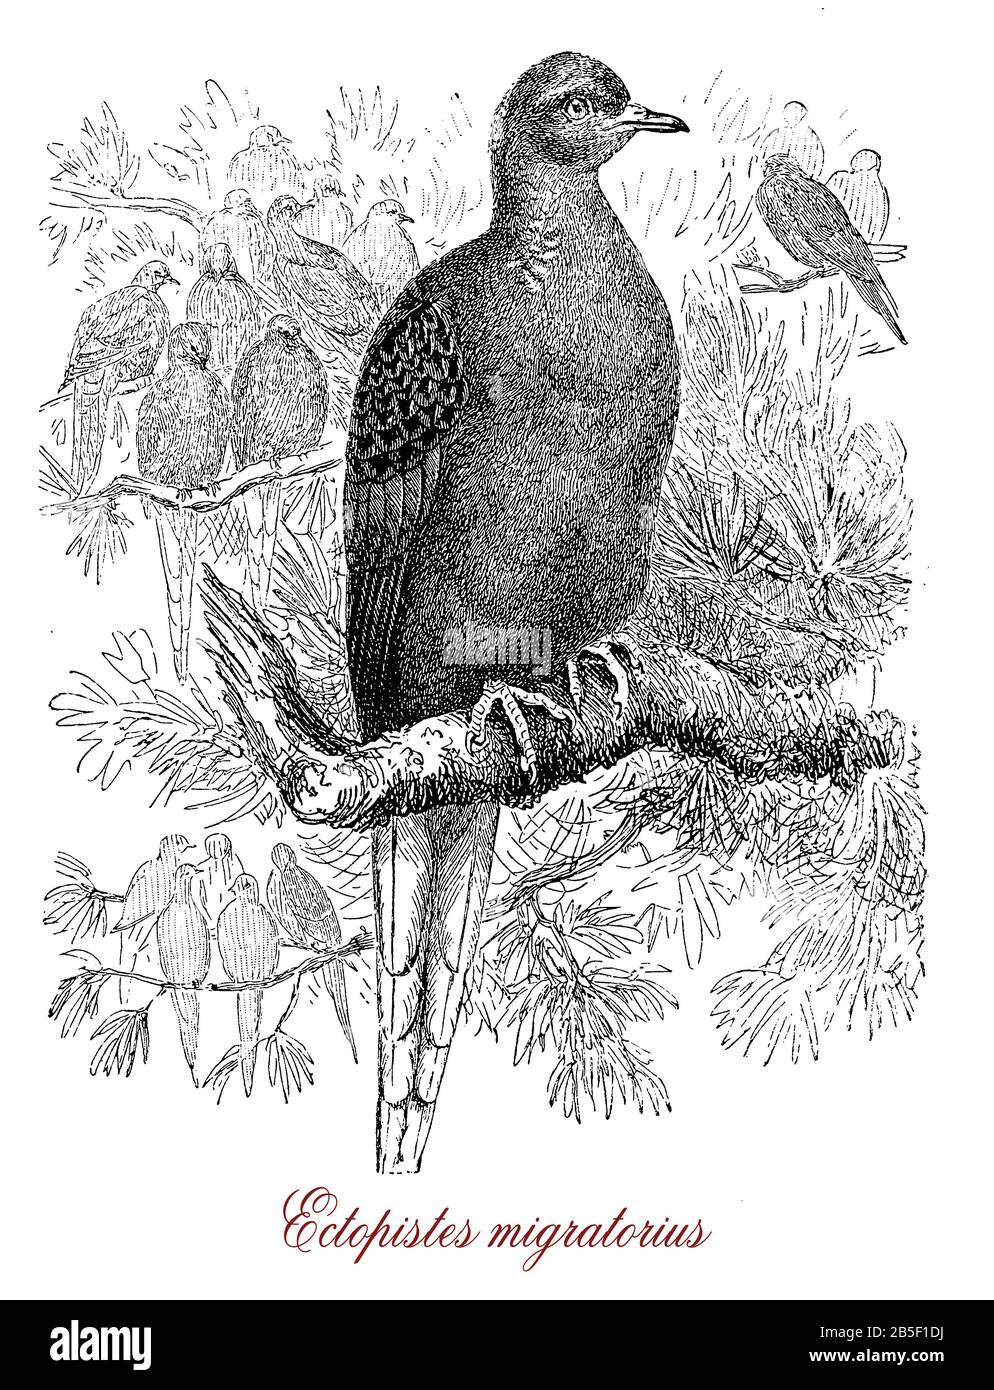 Paloma pasajero o ectopistes migratorius, especie extinta migratoria de paloma endémica de América del Norte Foto de stock